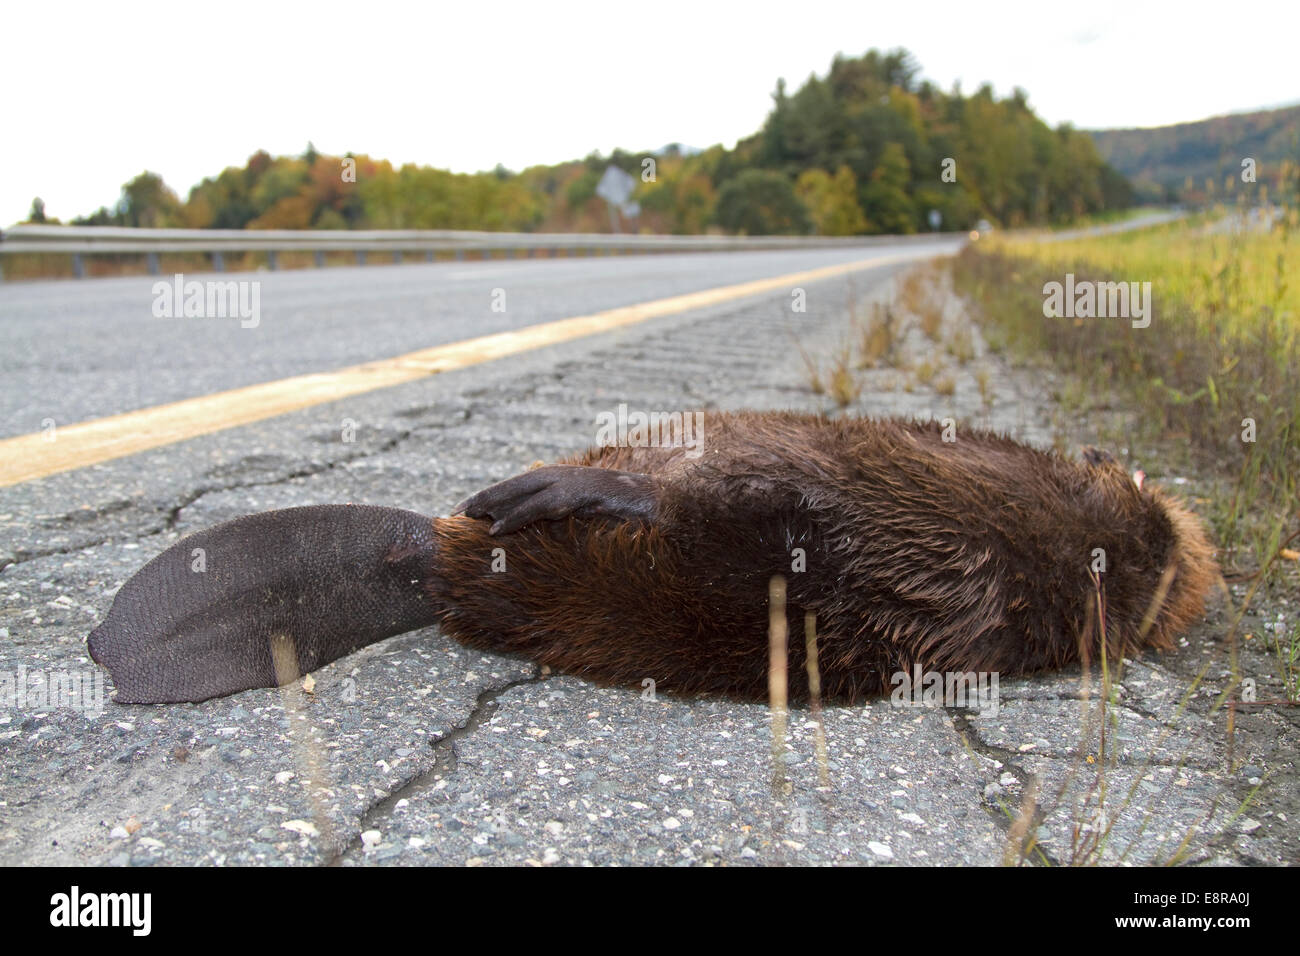 Image result for image of beaver roadkill